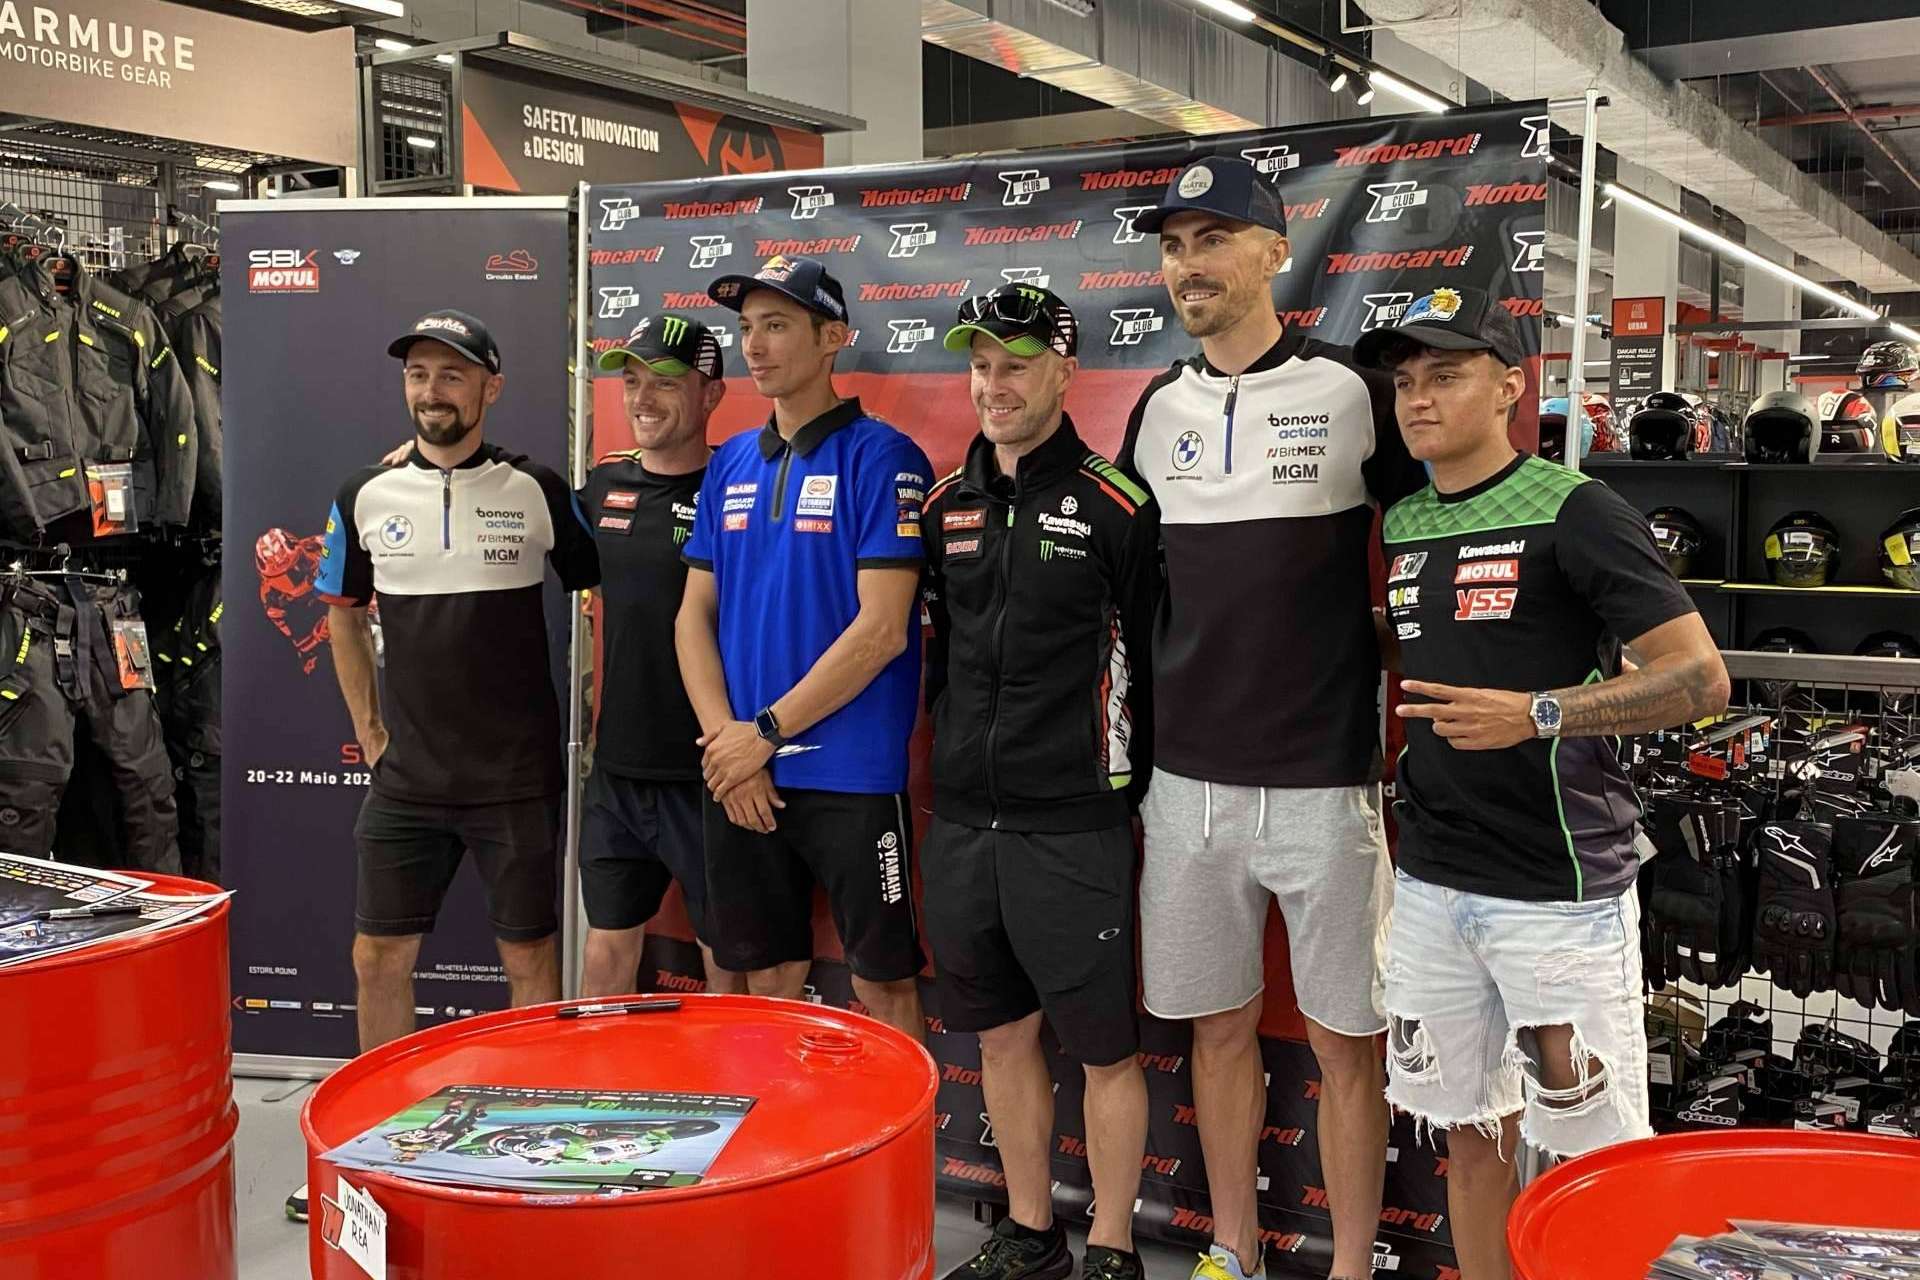 Jonathan Rea, Toprak Razgatlioglu y otras estrellas del Campeonato Mundial de Superbikes han visitado la tienda de Motocard en Lisboa